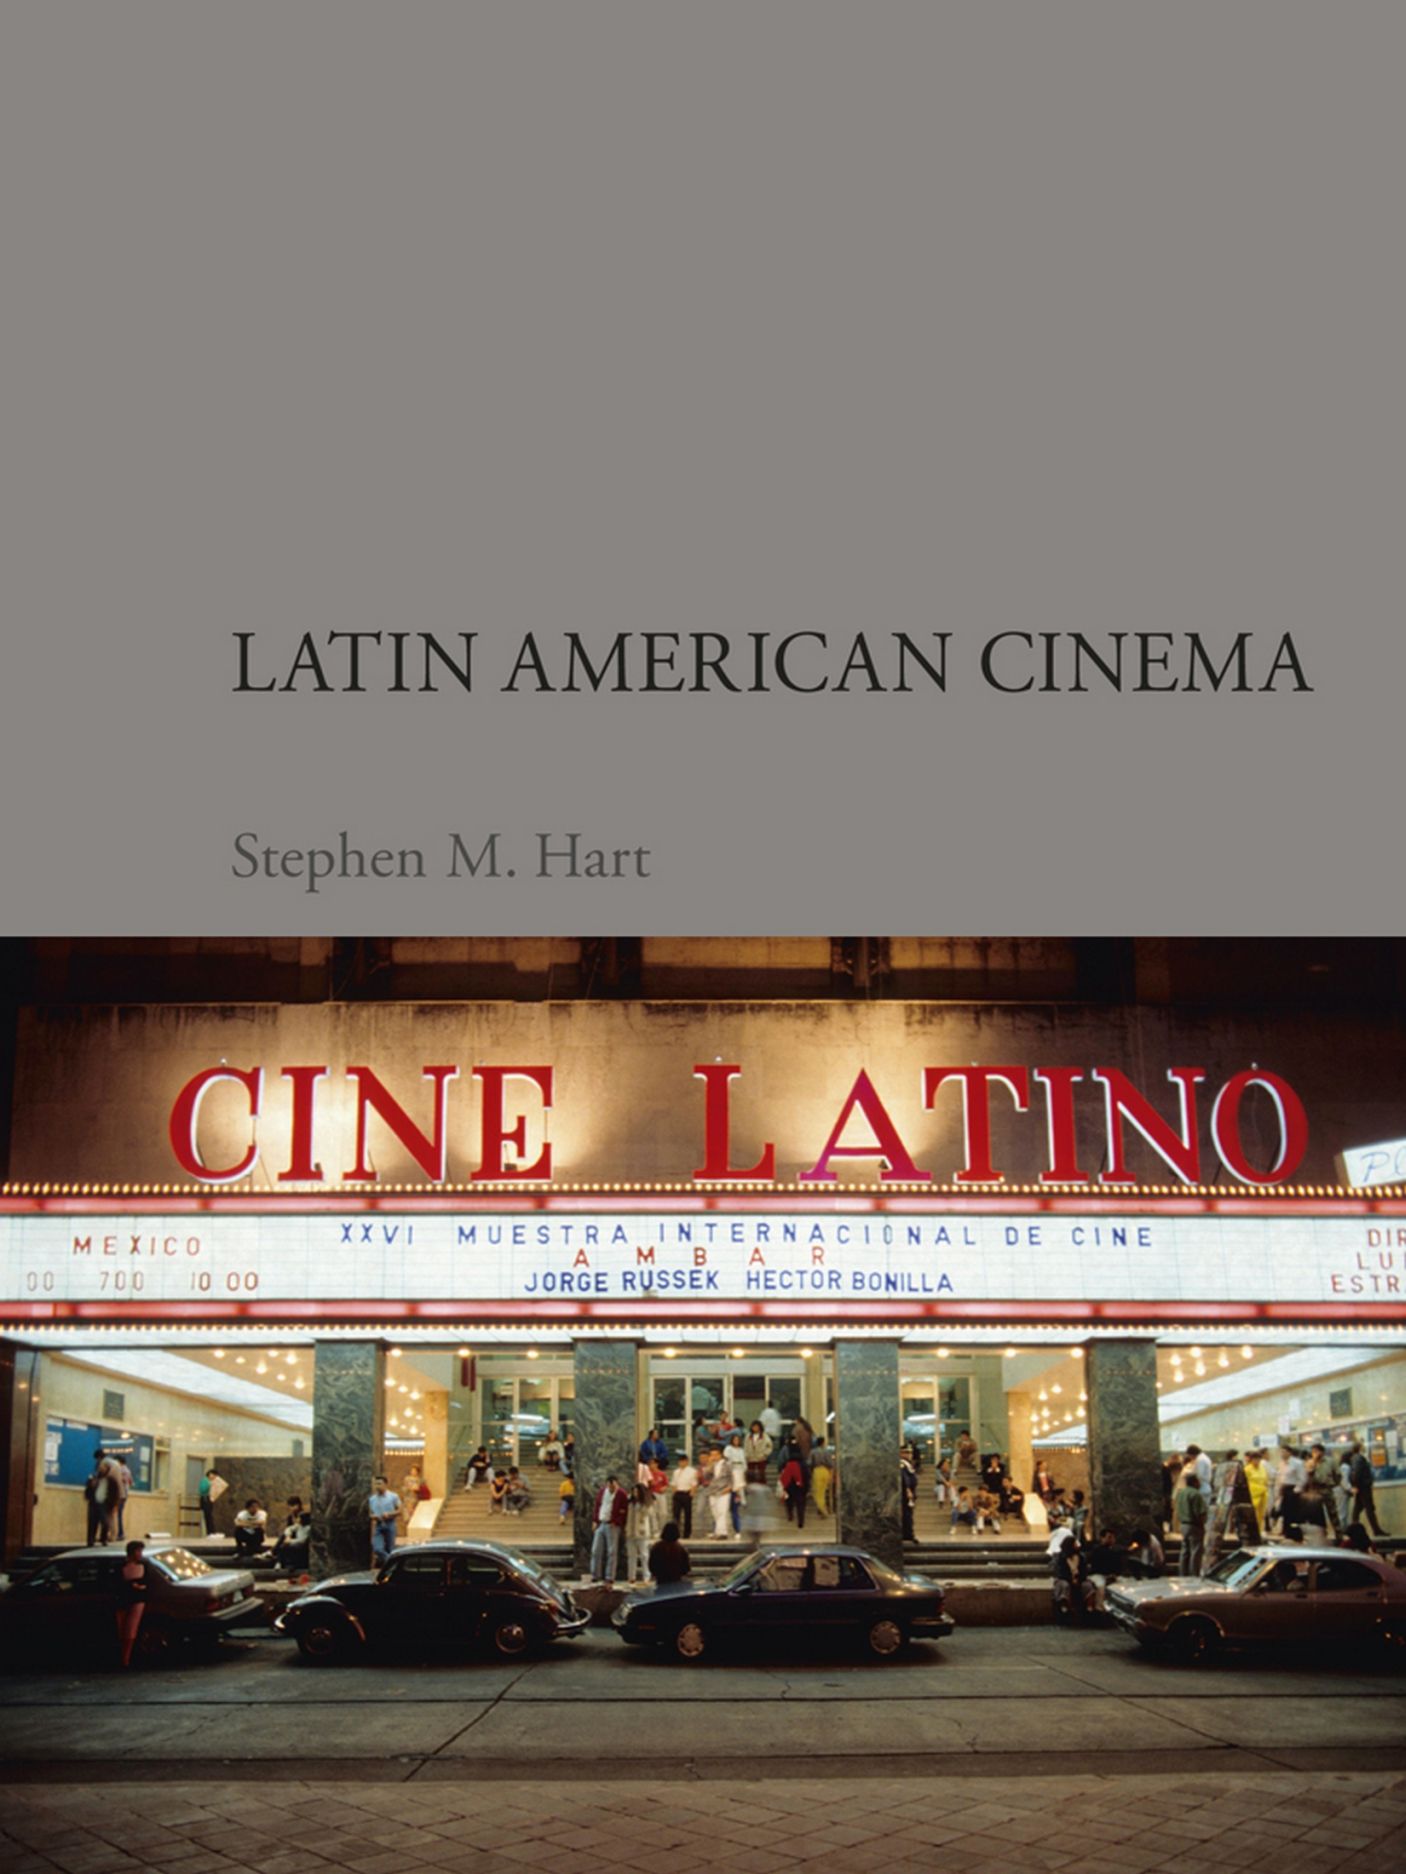 Latin-American Cinema